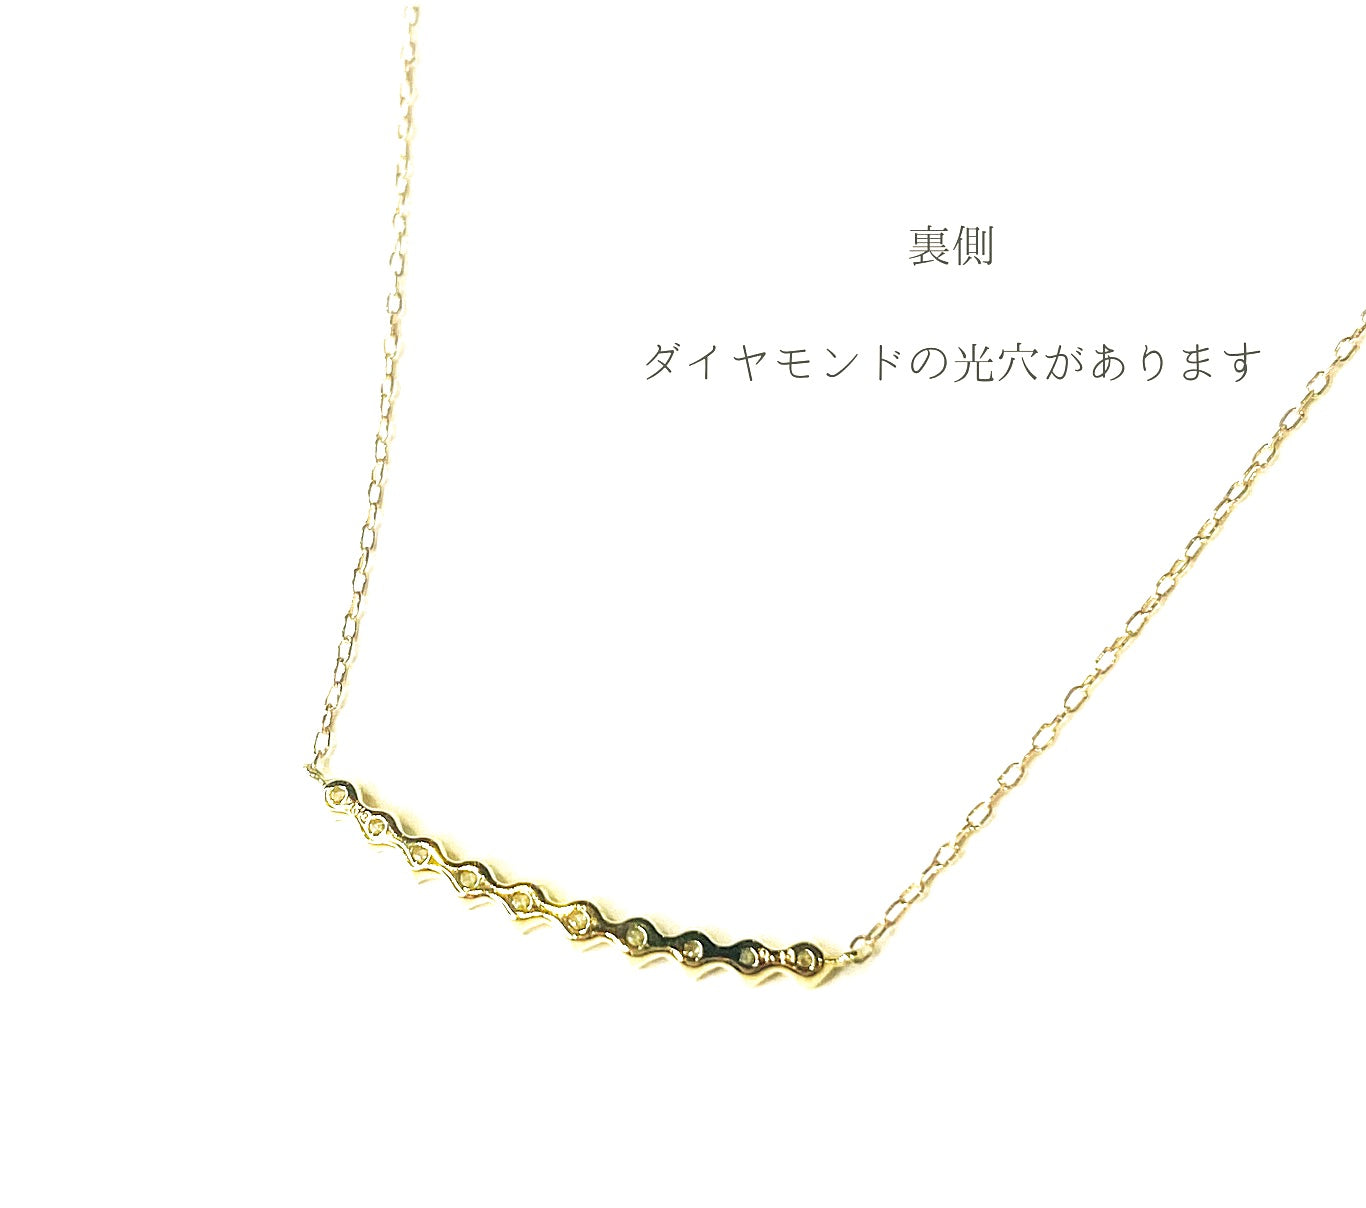 K18 Line0.15/ライン ダイヤモンド ネックレス